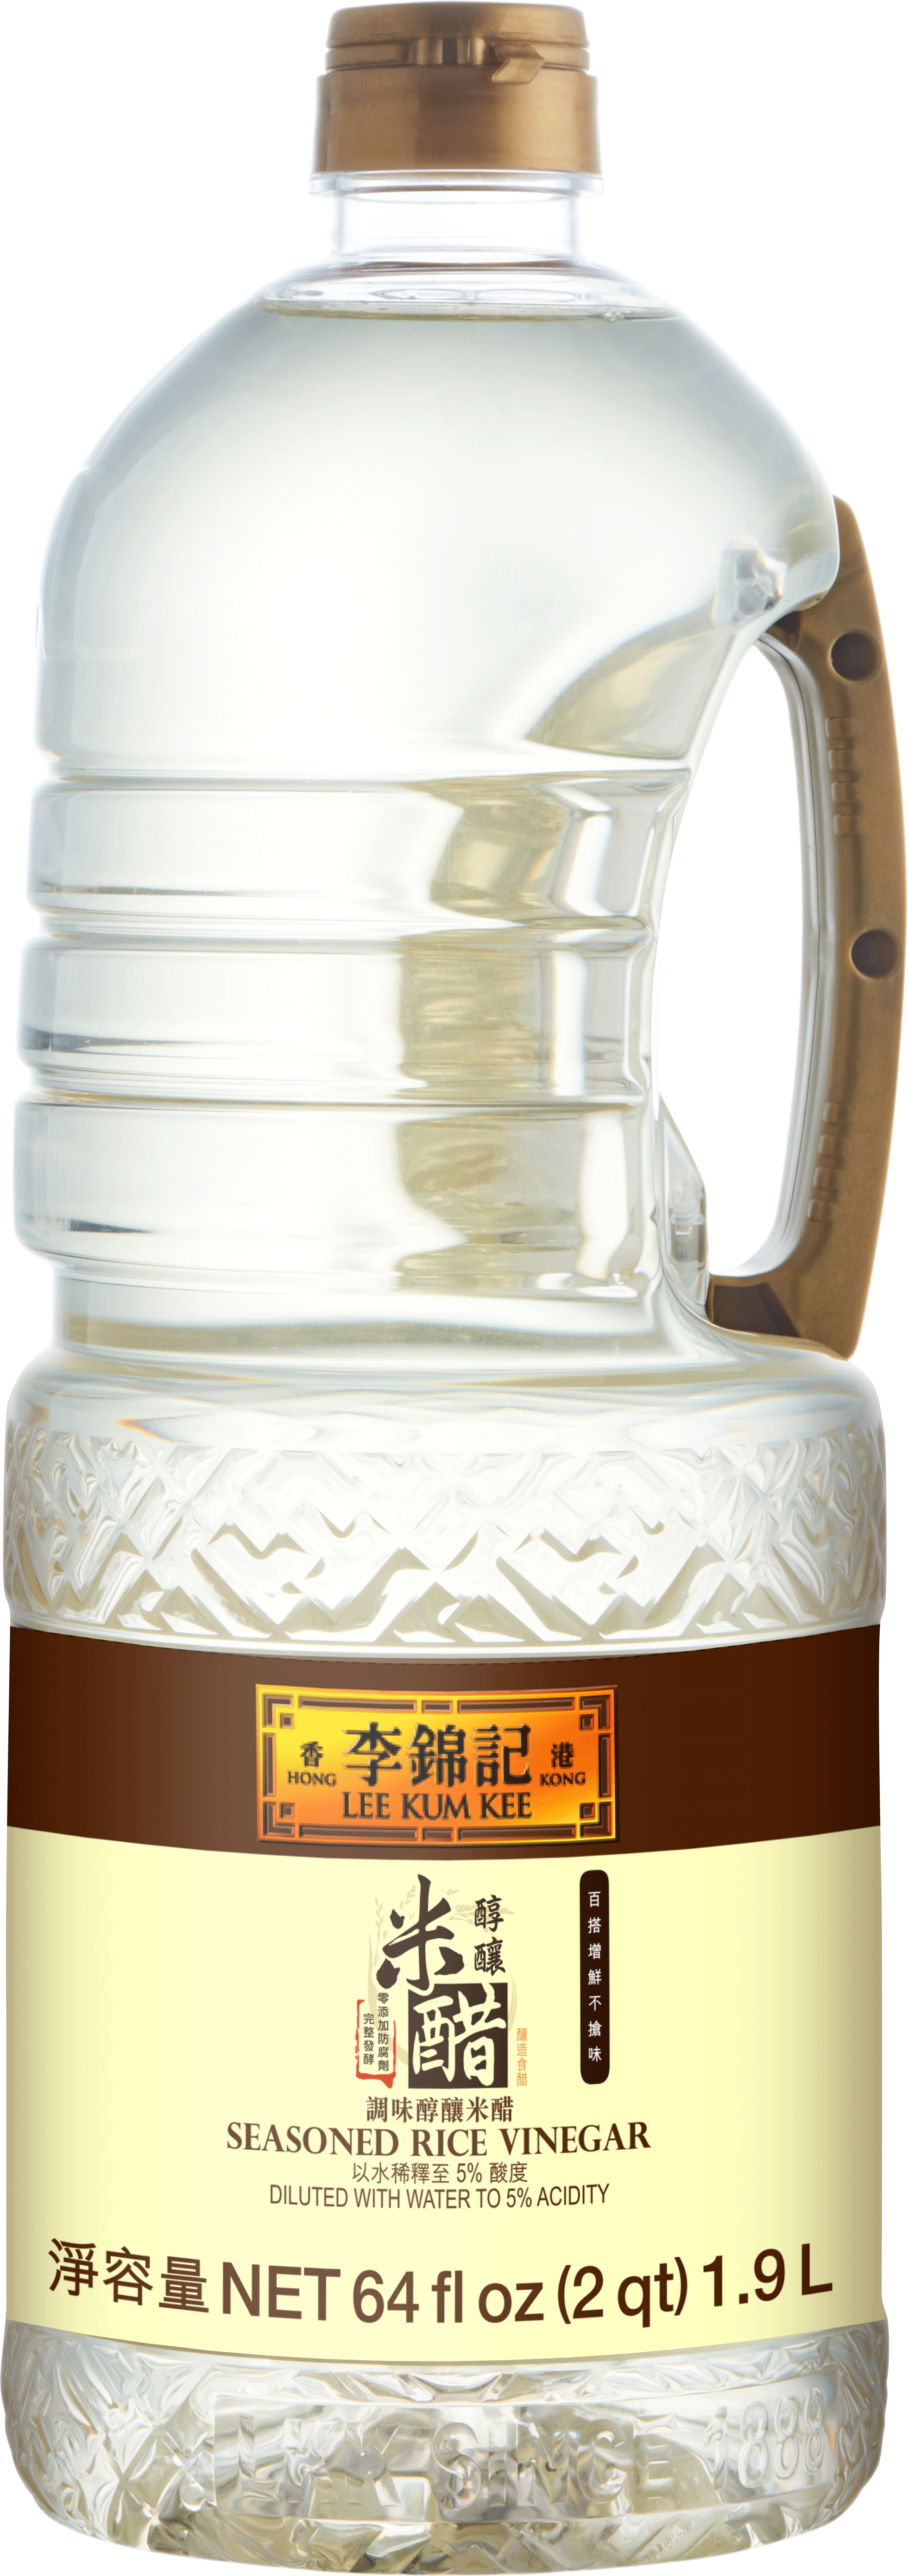 Seasoned Rice Vinegar 64 fl oz (1.9 L)